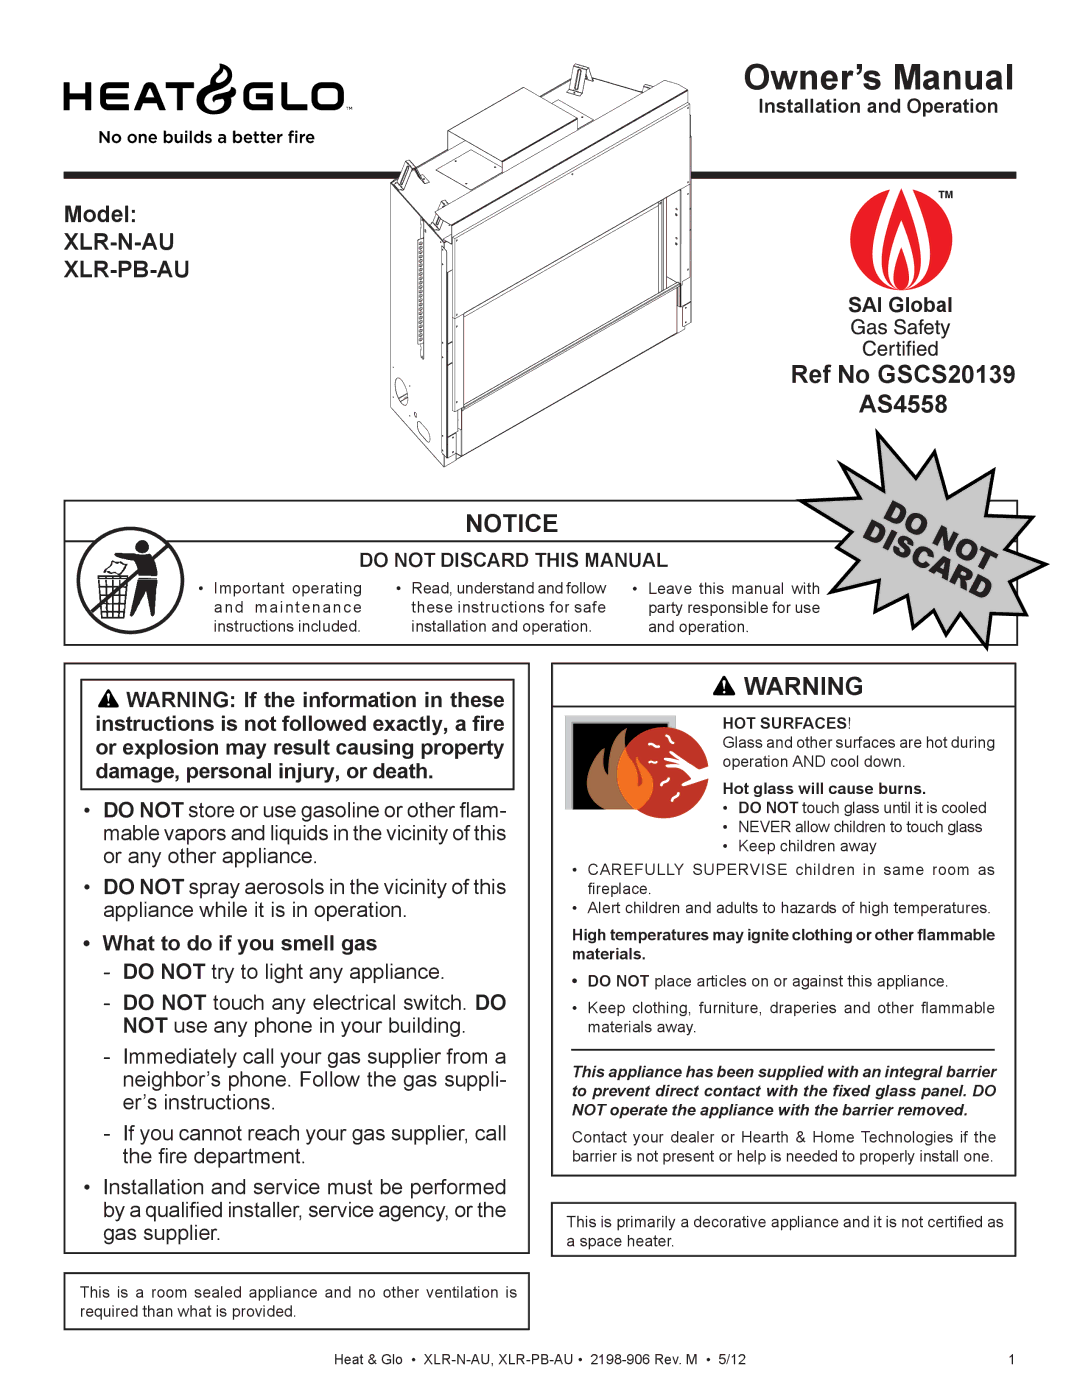 Heat & Glo LifeStyle XLR-N-AU, XLR-PB-AU manual Ref No GSCS20139 AS4558, SAI Global, What to do if you smell gas 